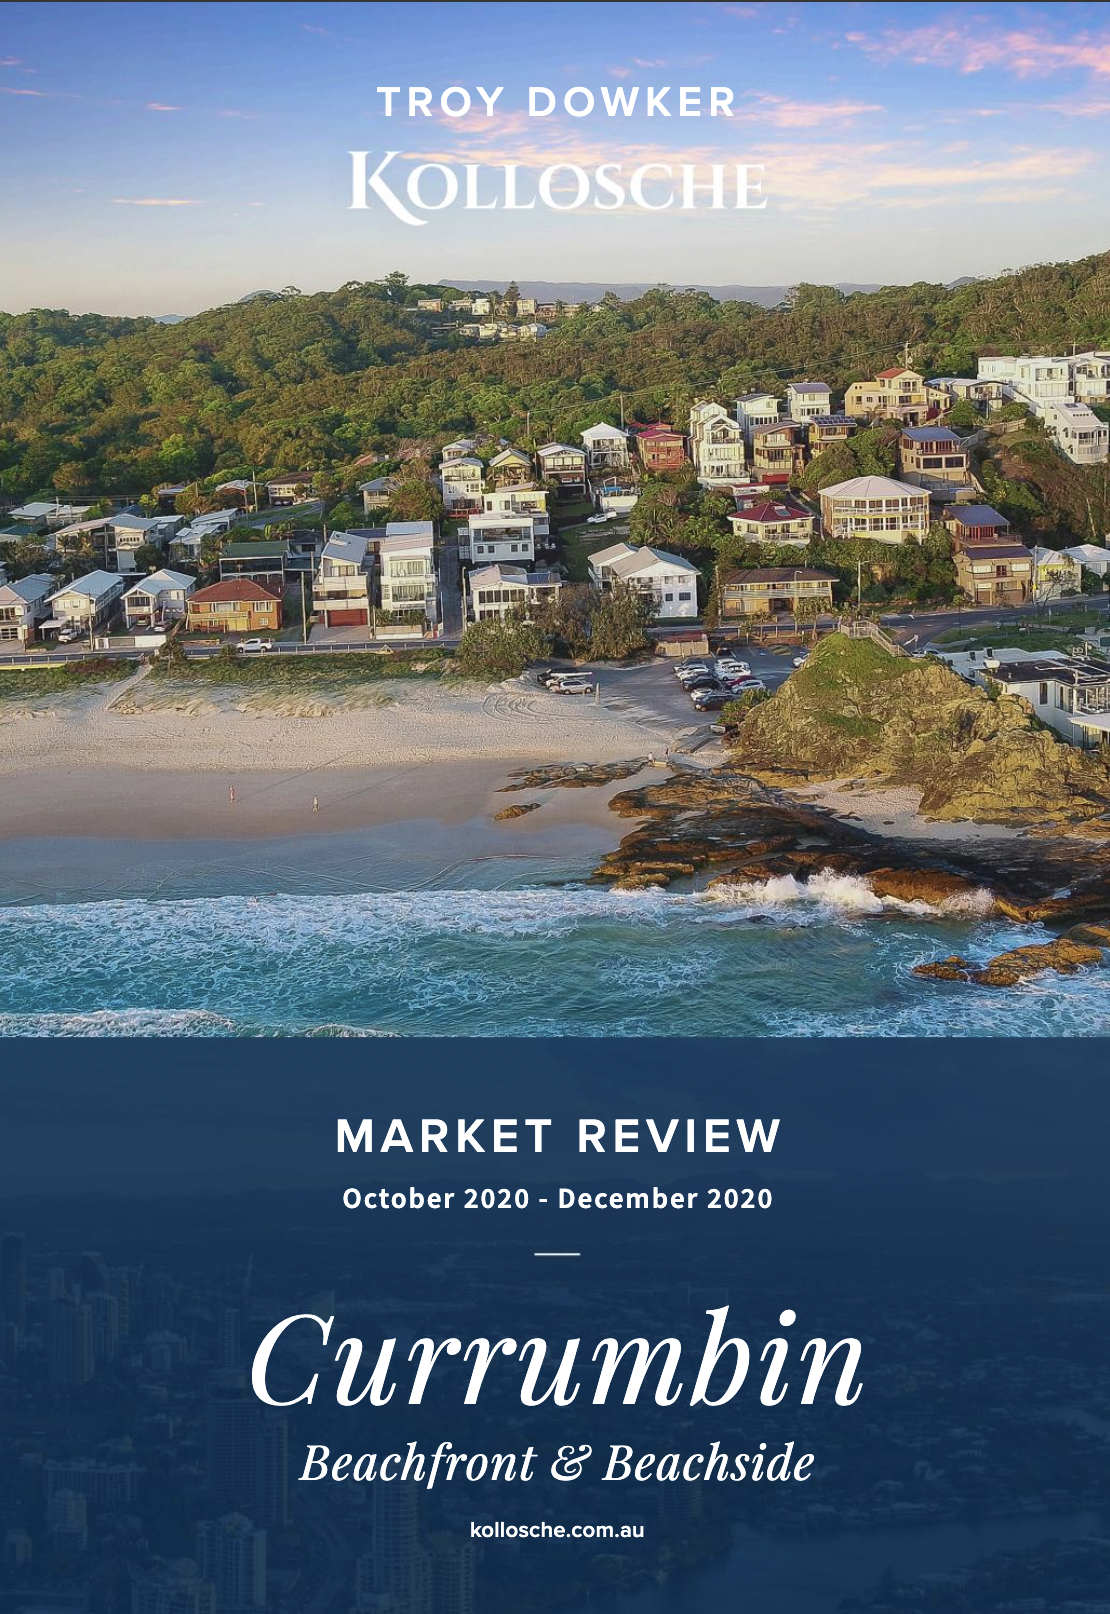 Currumbin Market Review | October – December 2020 | Troy Dowker – Kollosche